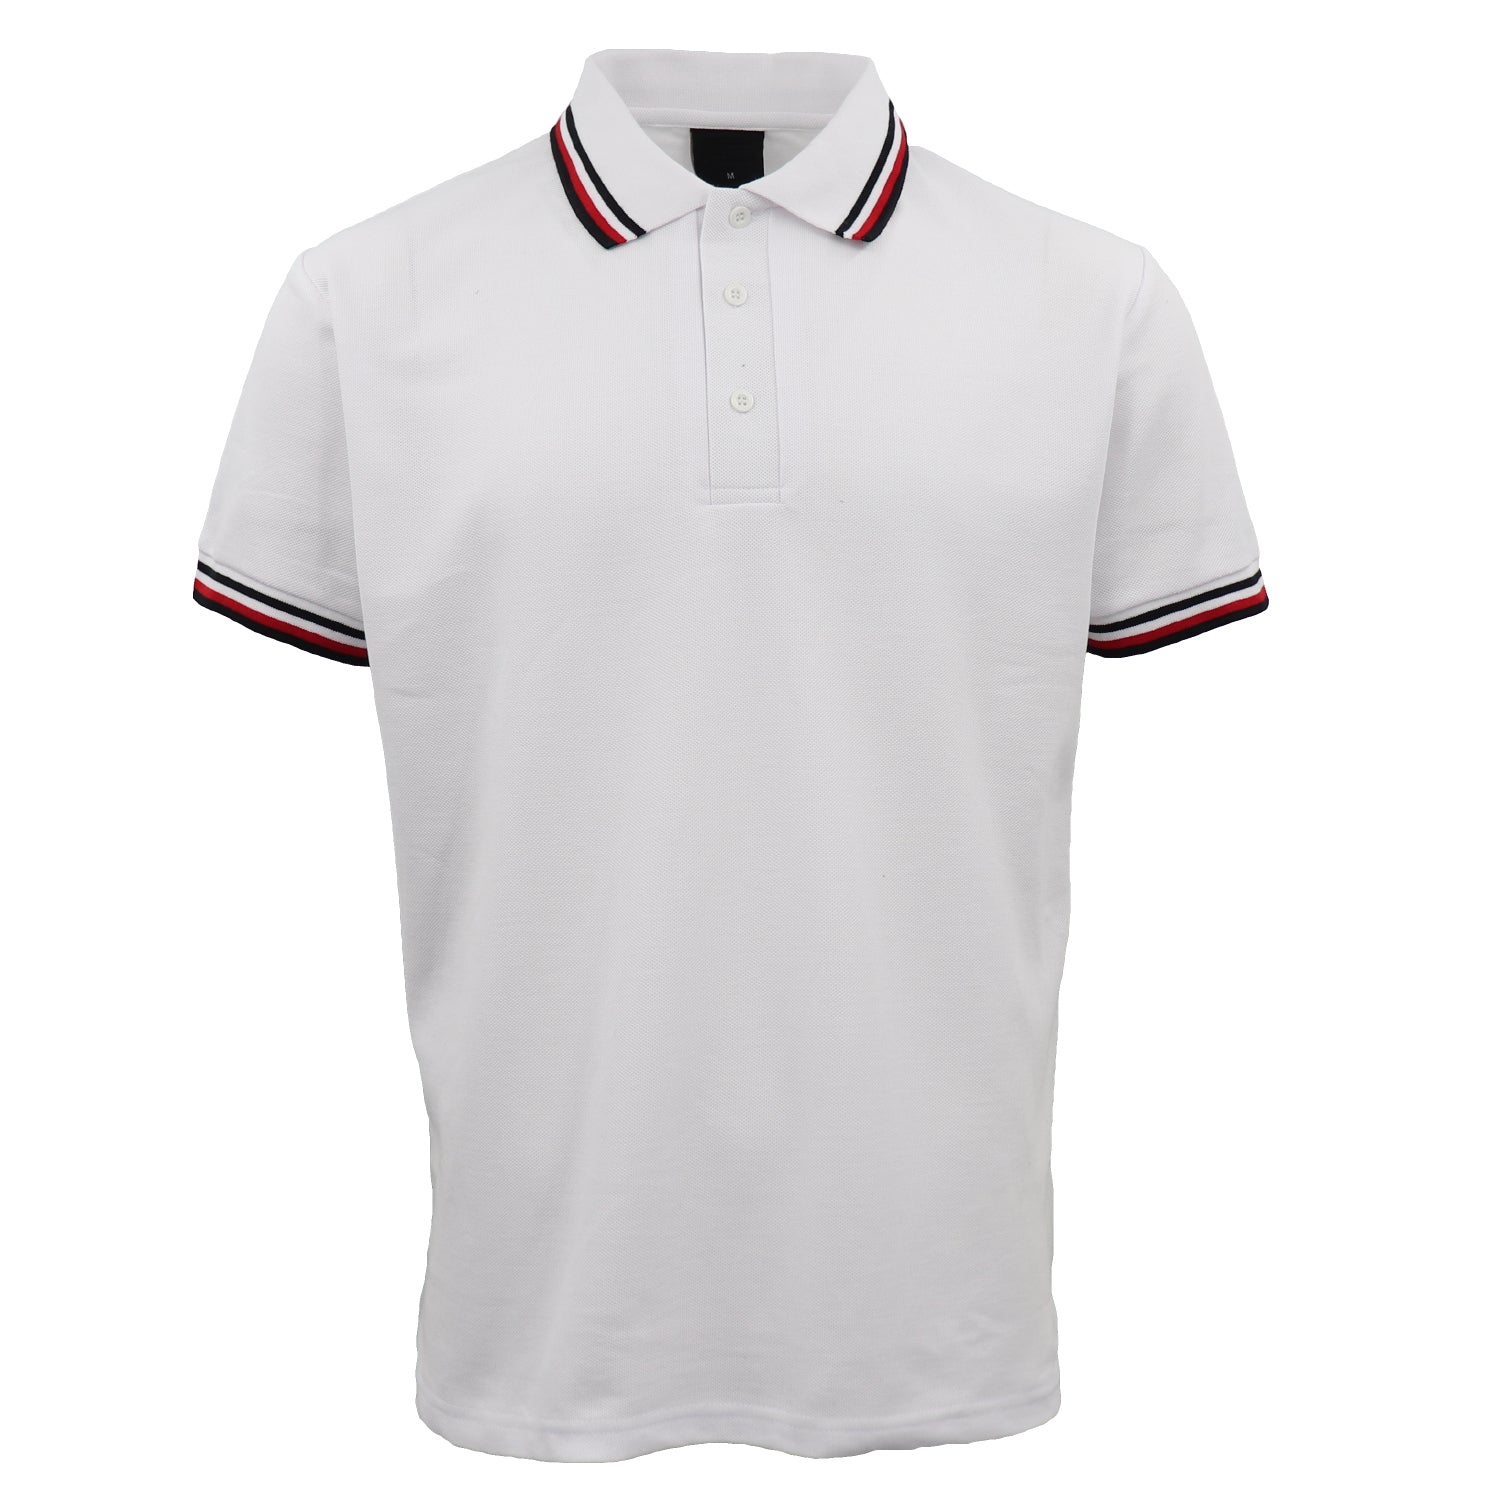 Men's Unisex Polo Shirts Basic Plain Breathable Tops Cotton Cascual Sport Shorts, White, L